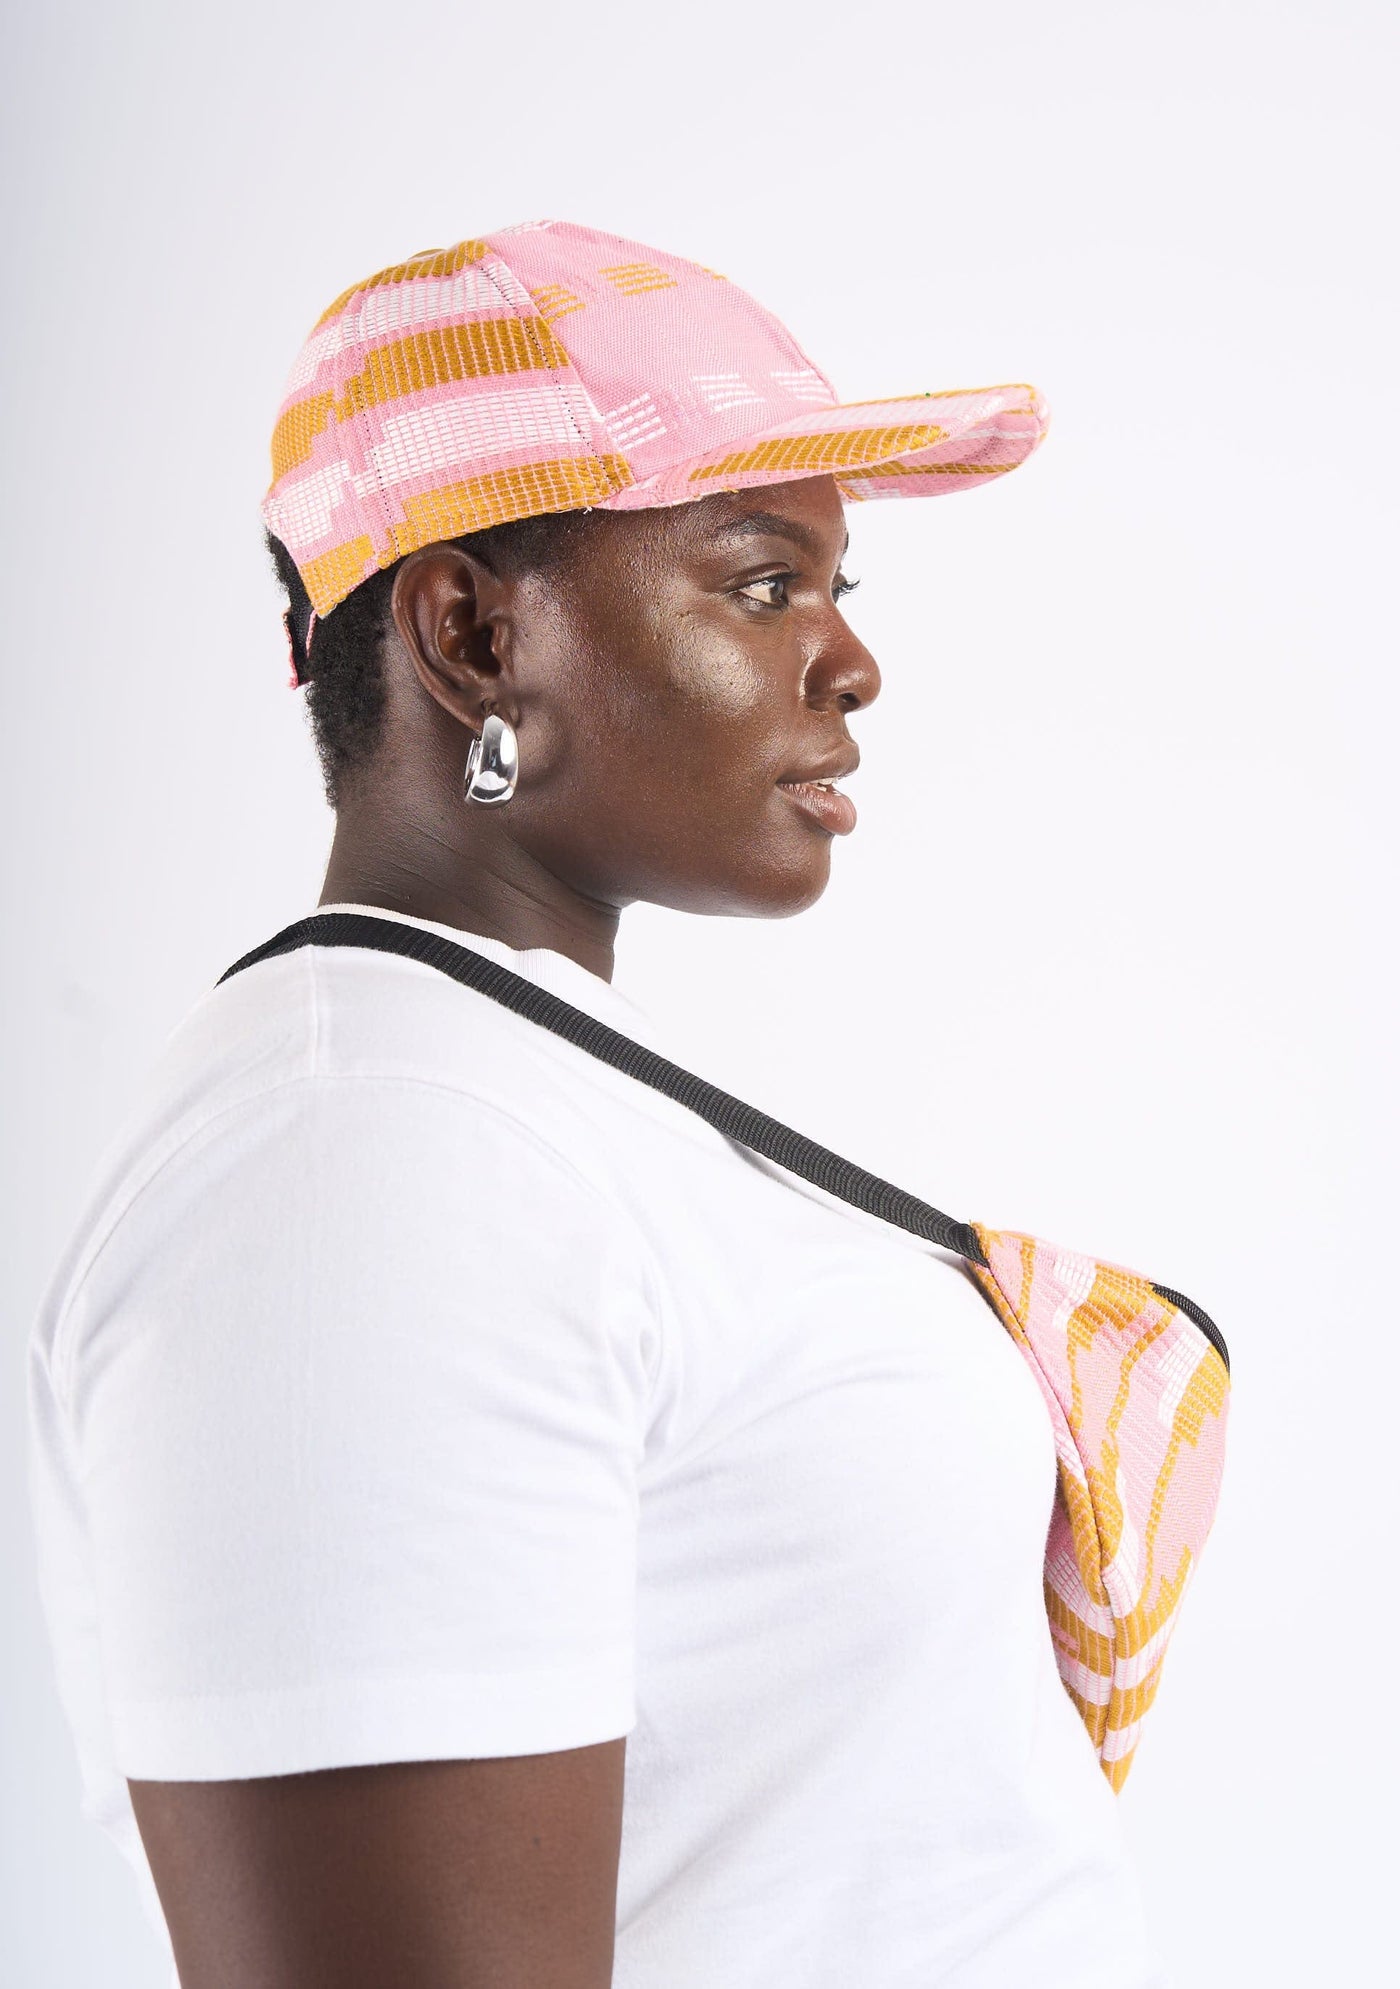 YEVU Accessories - Headwear Kente Cap - Pink Royals